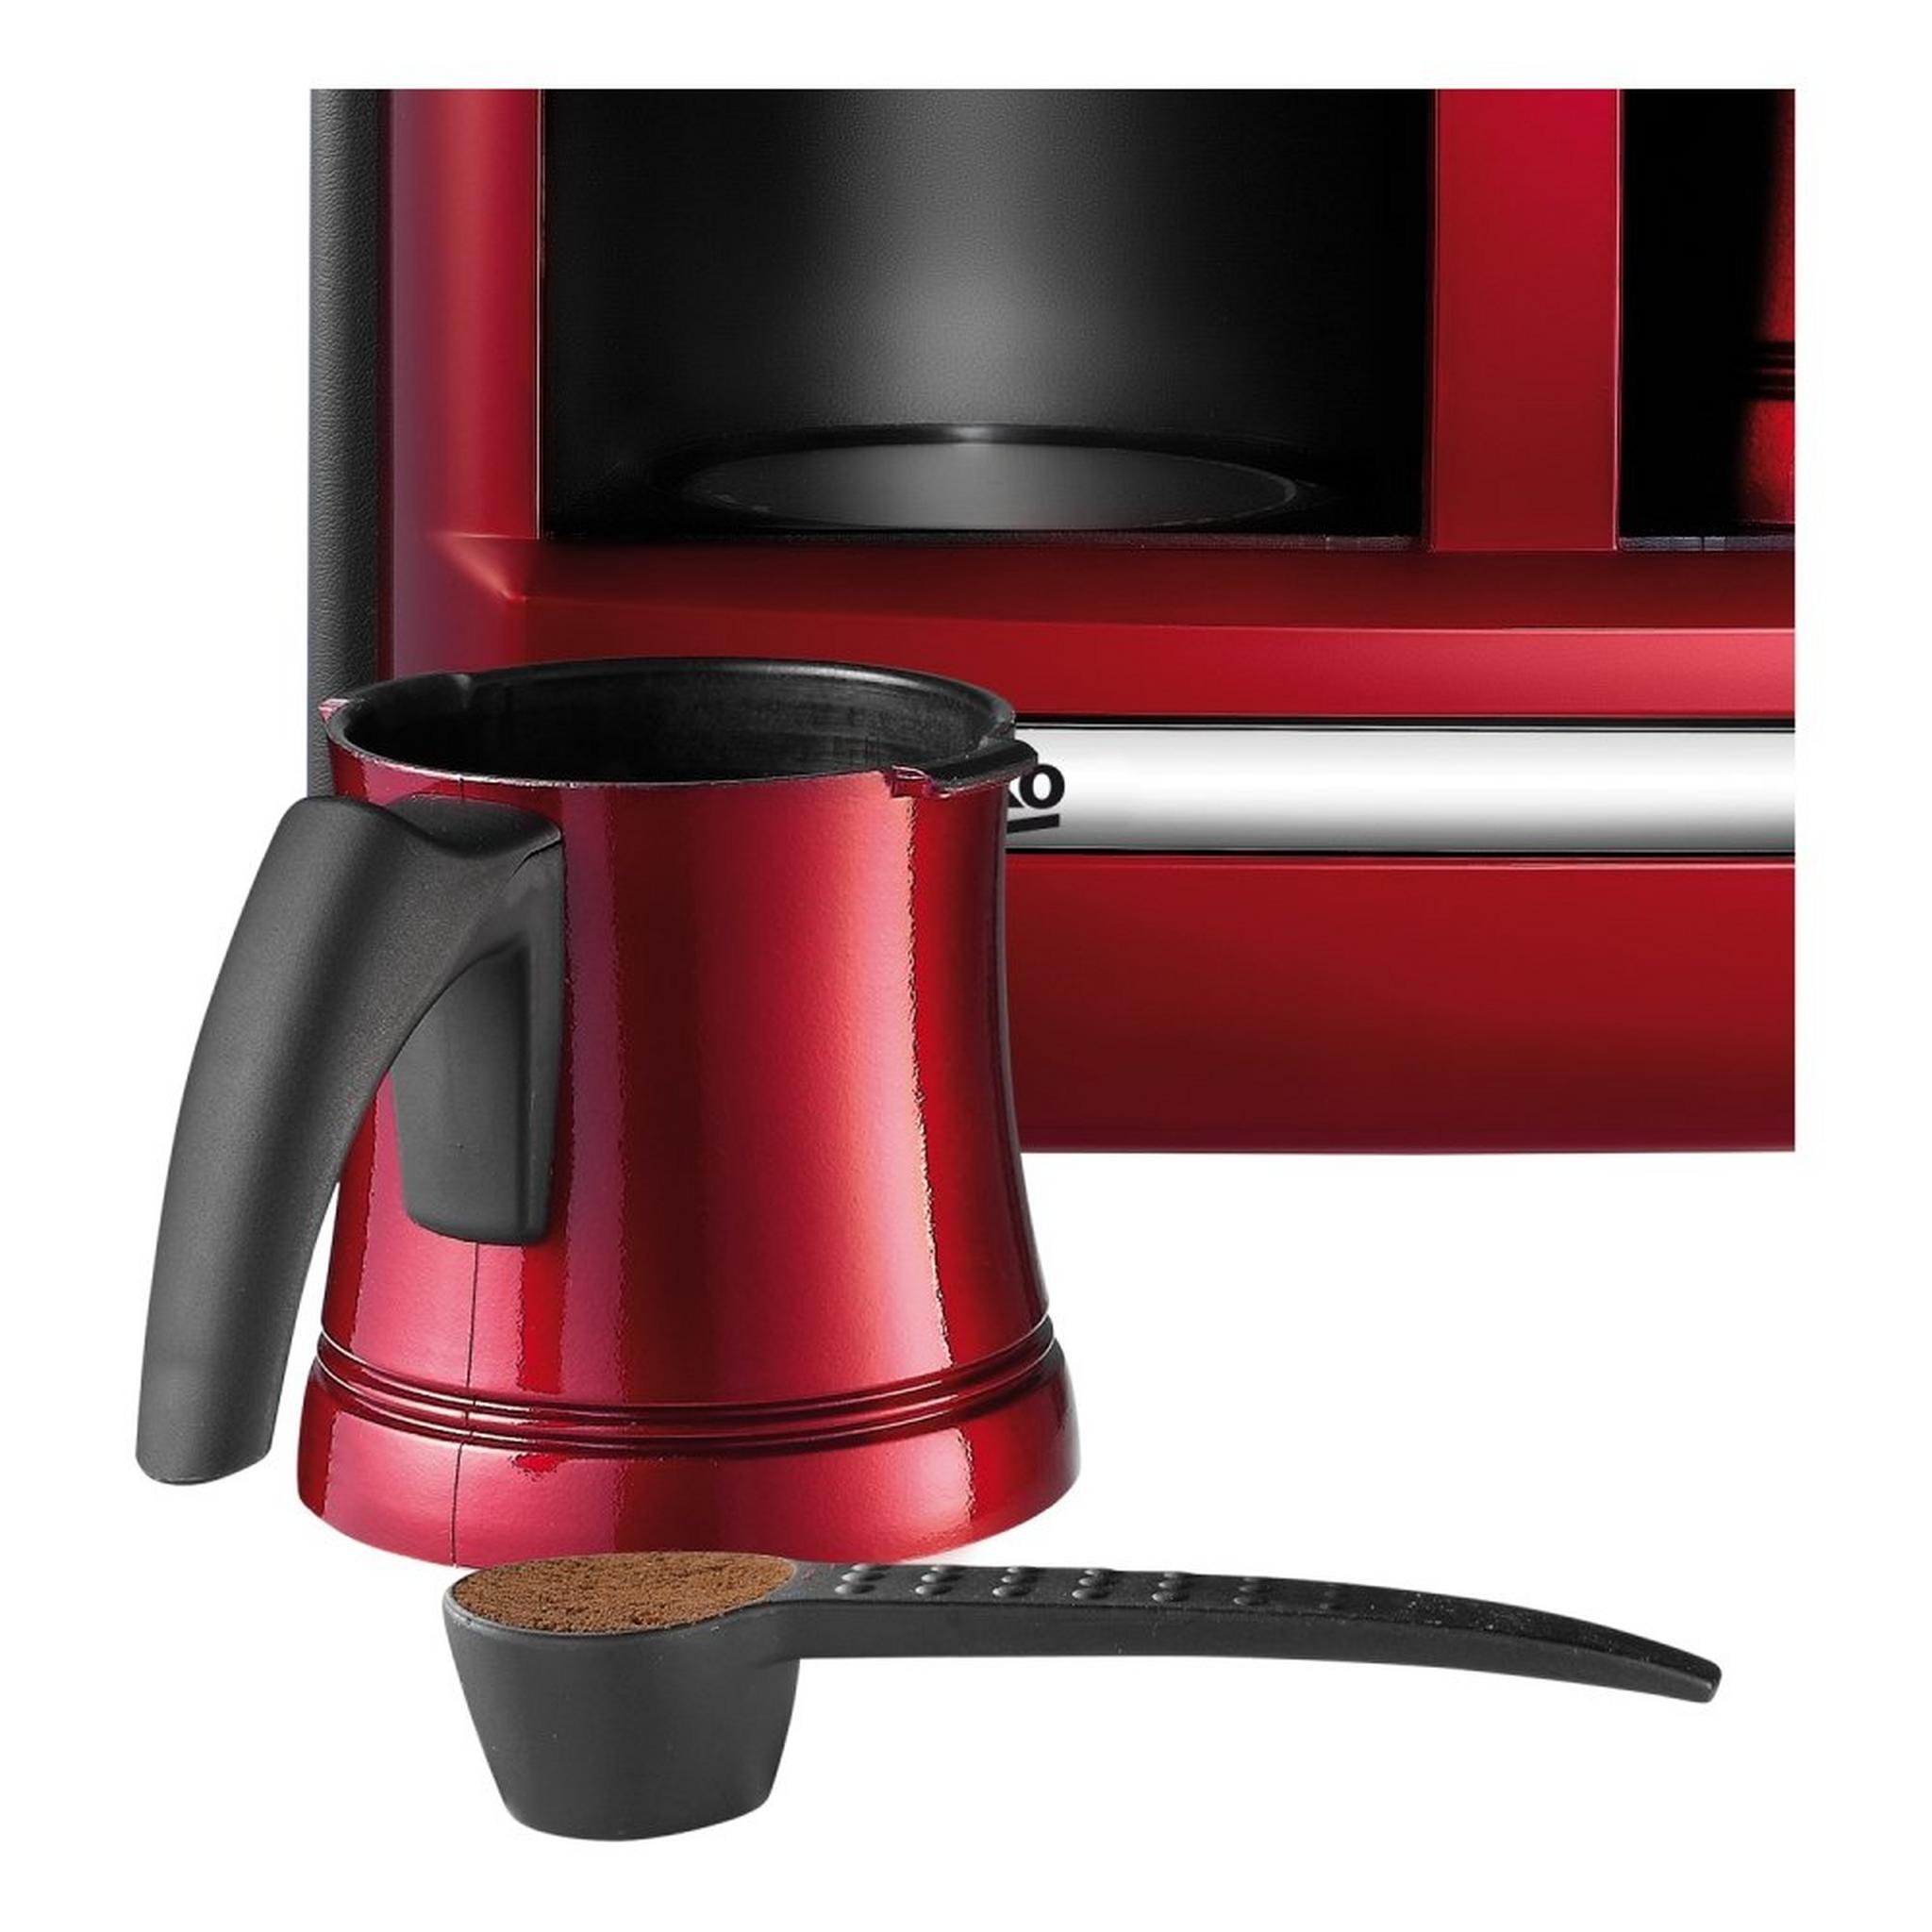 Beko 1200W Double Pot Turkish Coffee Maker (BKK2113P LAL) – Red